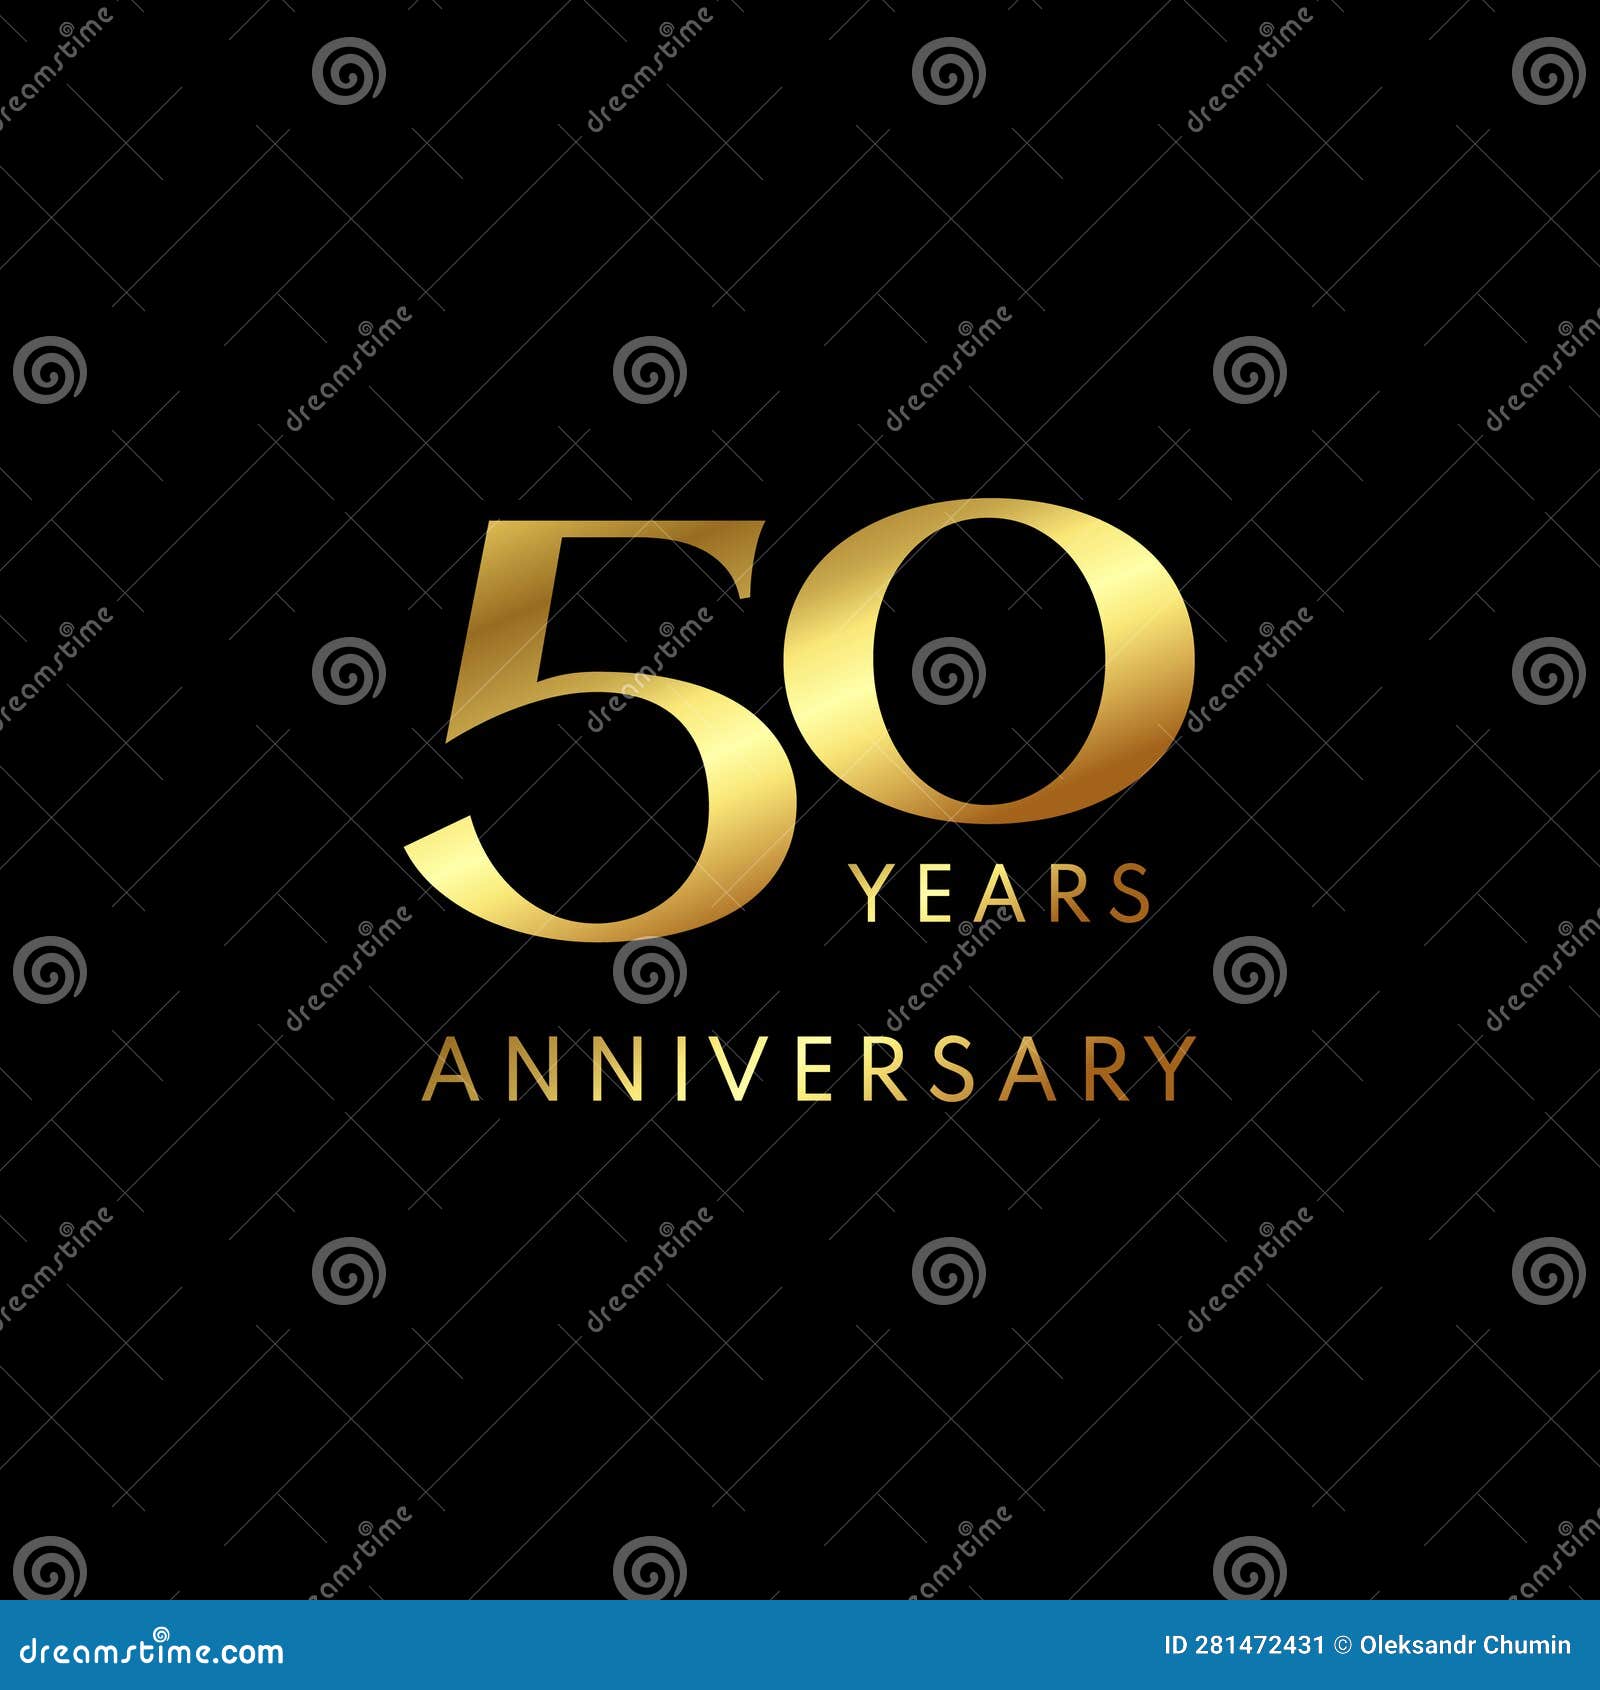 50 Year Anniversary Logo, Golden Color, Vector Template Design Element ...